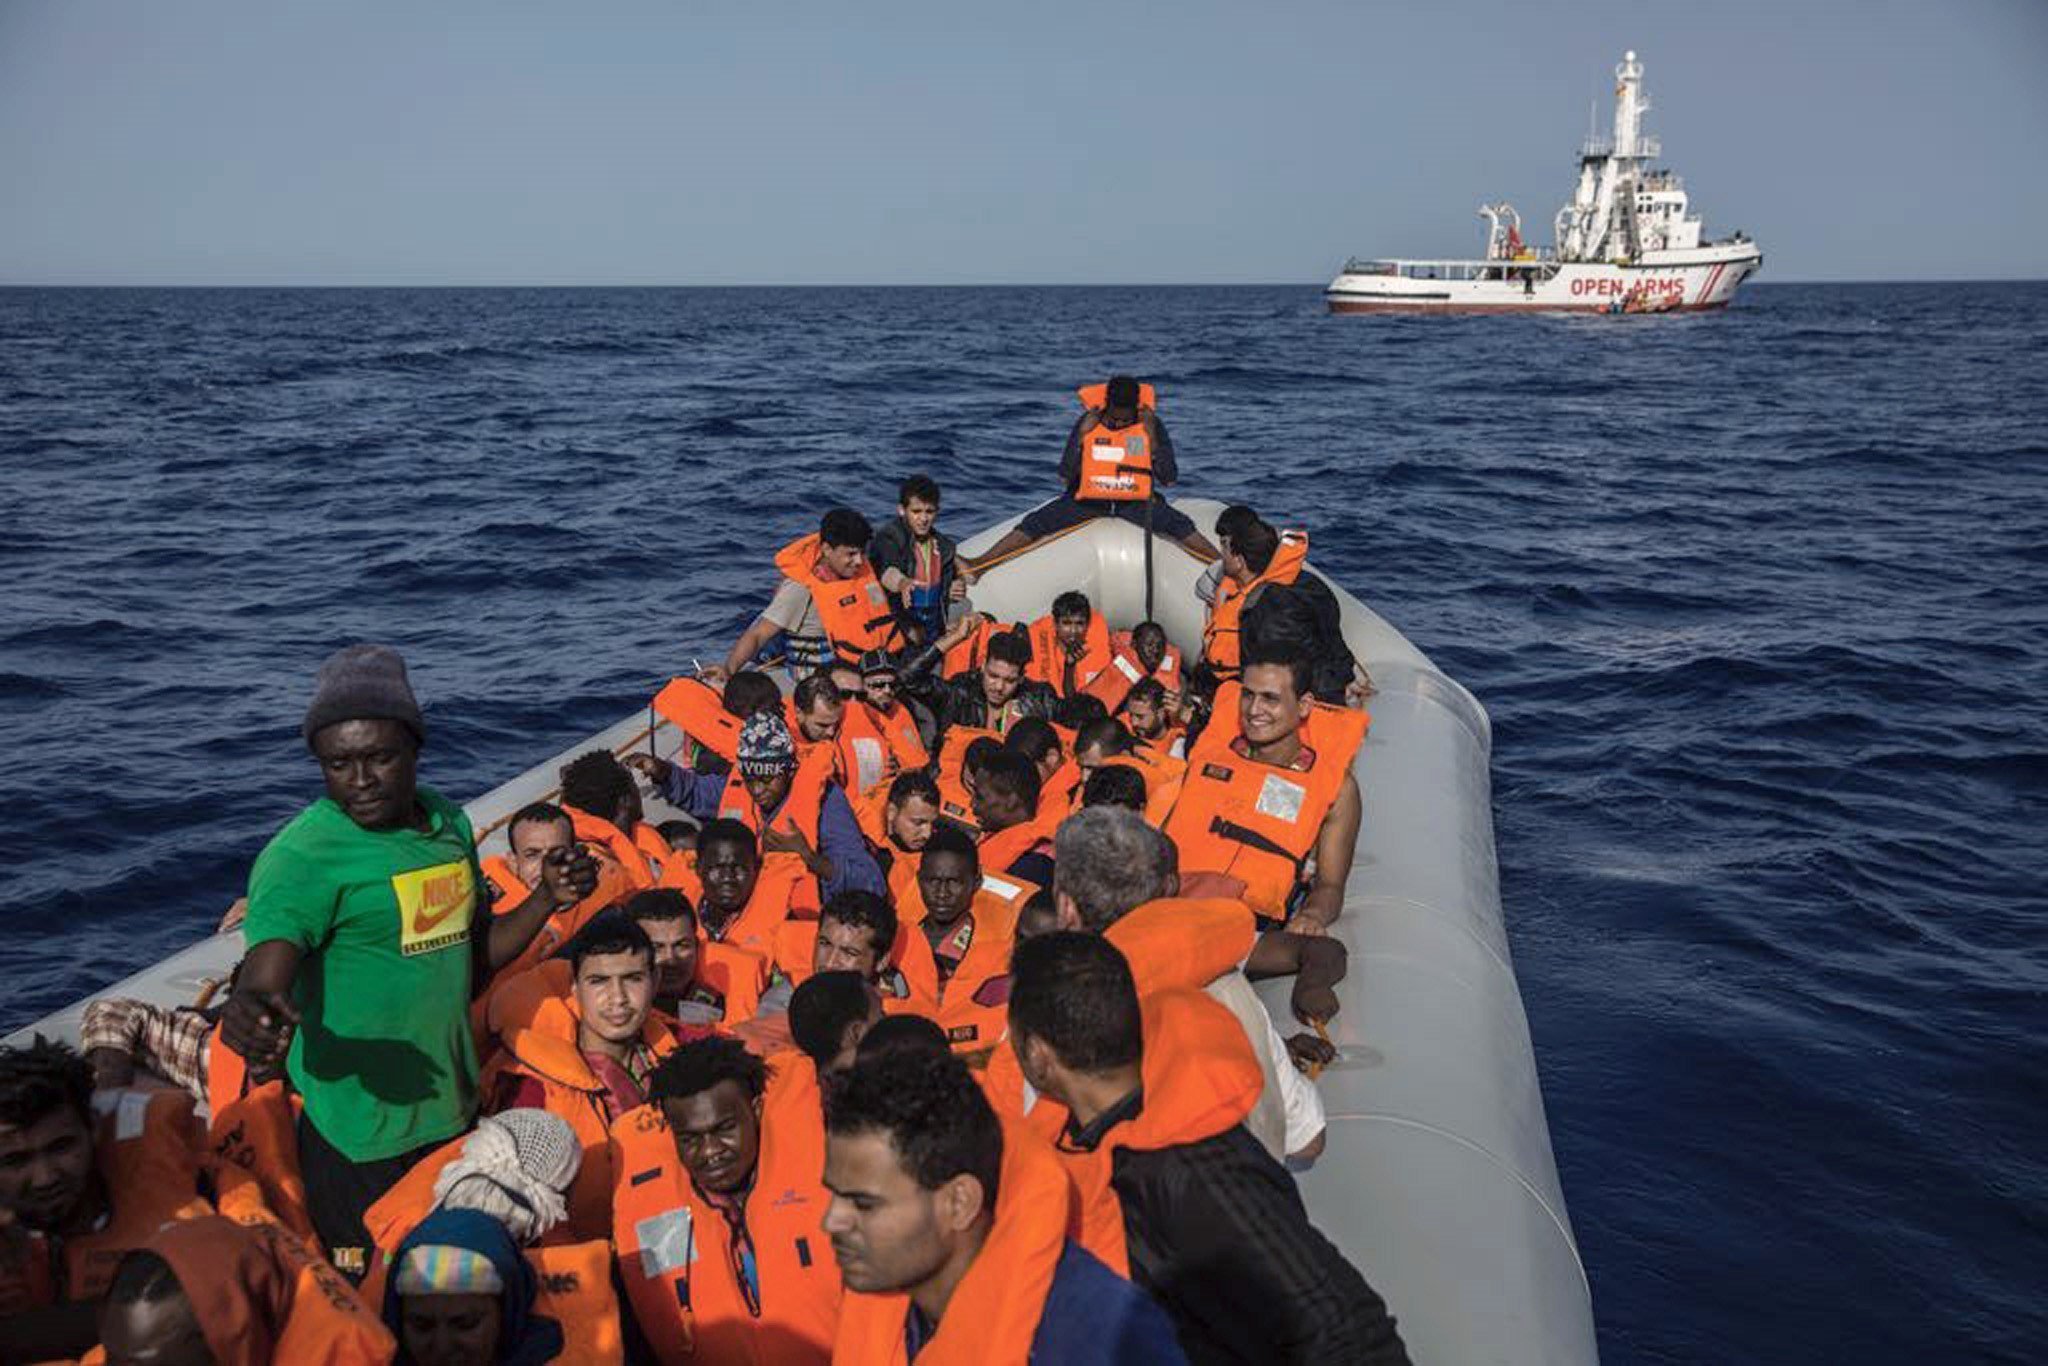 Patrullers libis intercepten 276 migrants en aigües internacionals